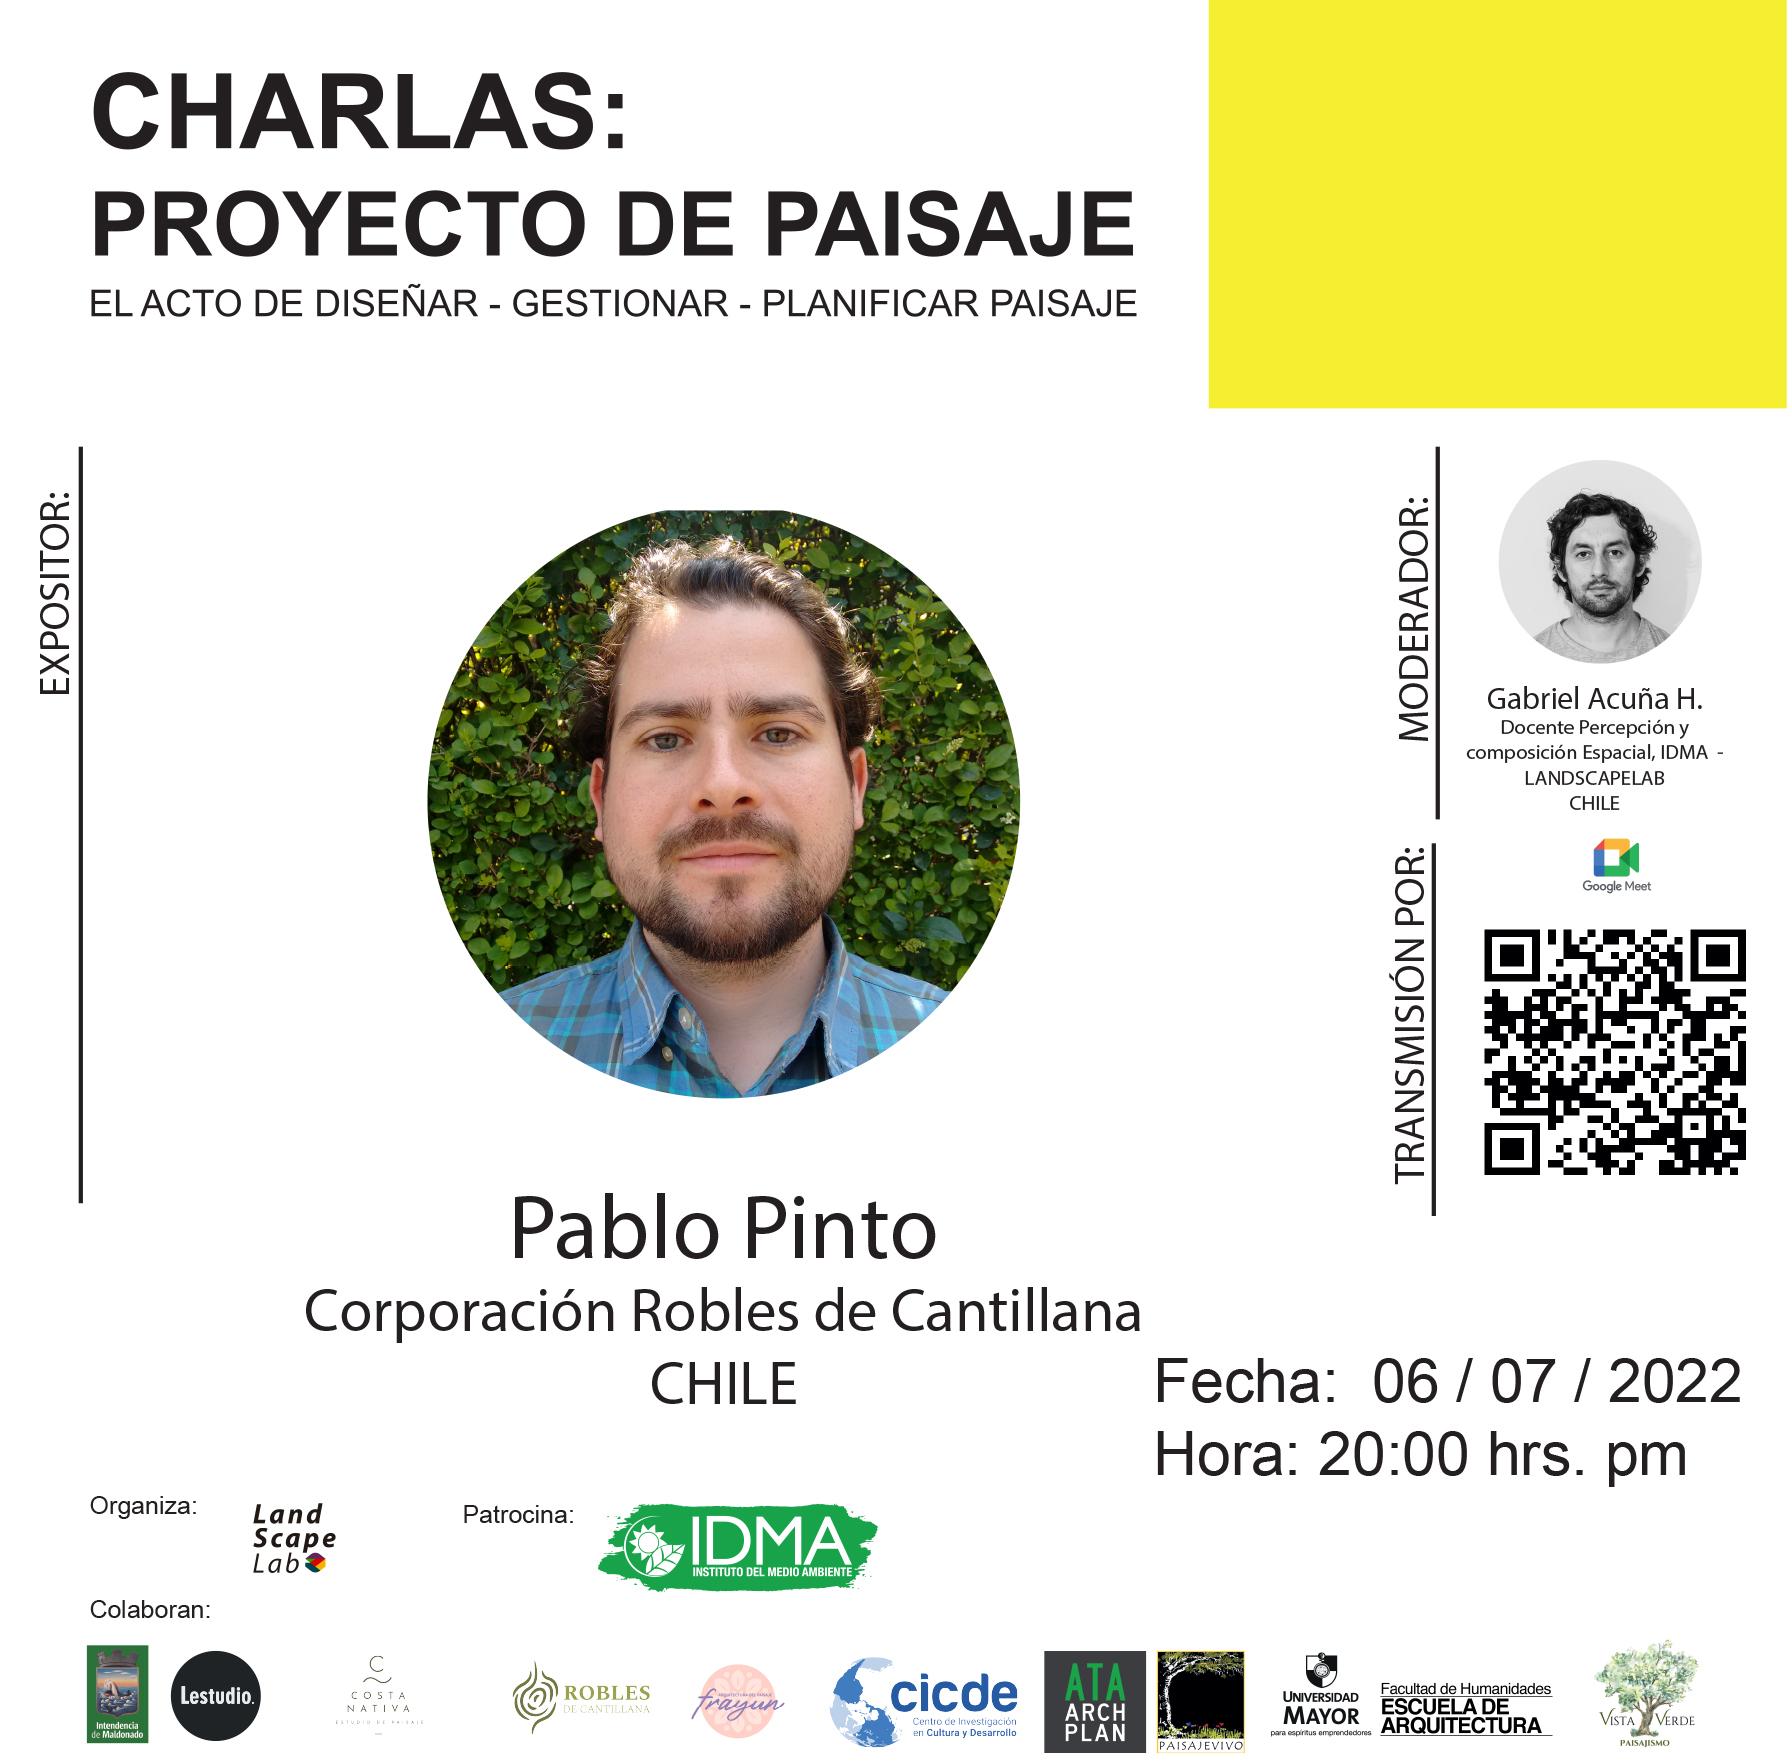 Charla Proyecto de Paisaje: Pablo Pinto Chile